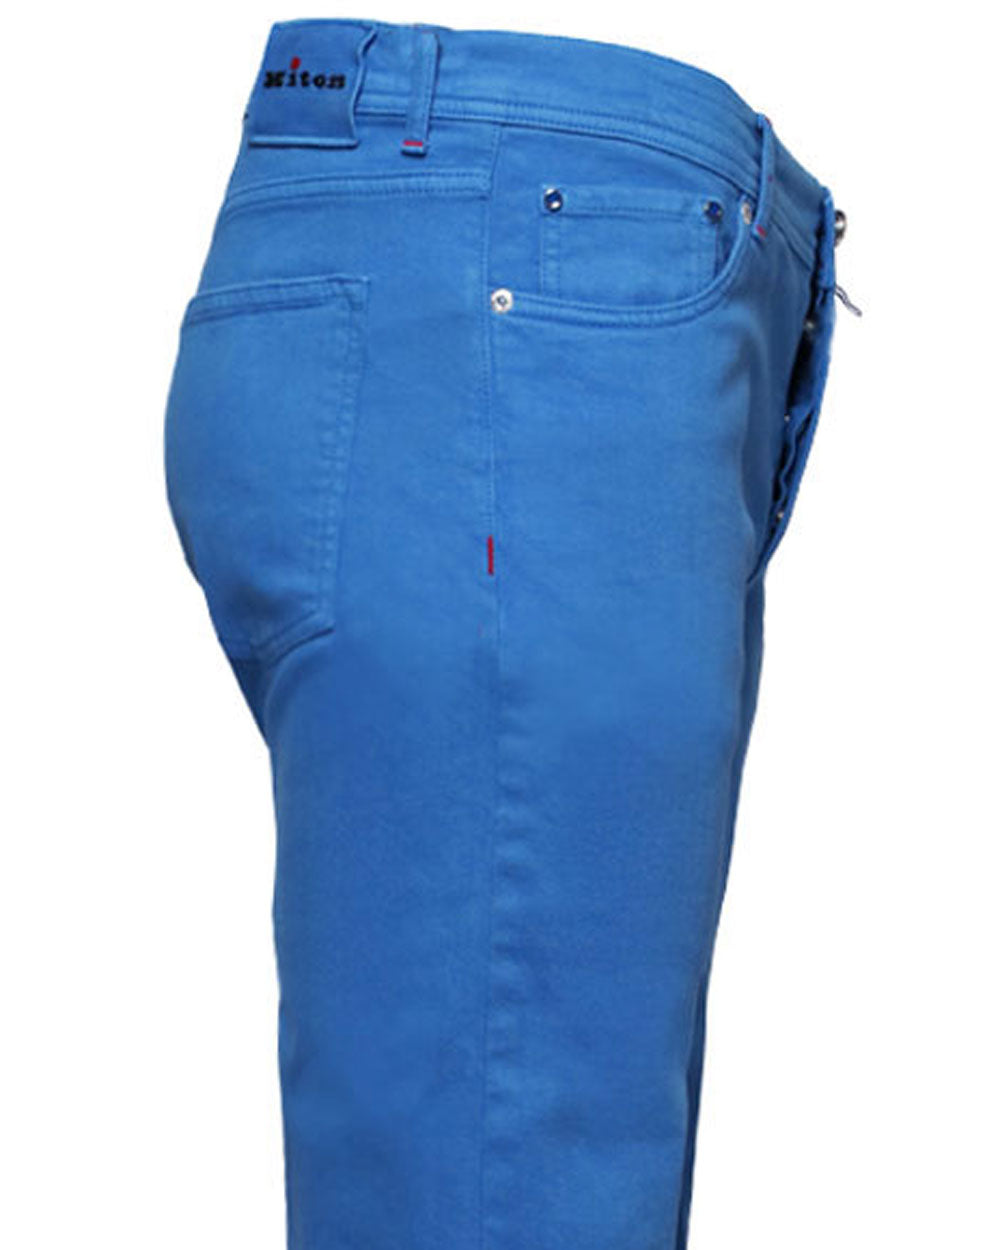 Bright Blue 5 Pocket Pant